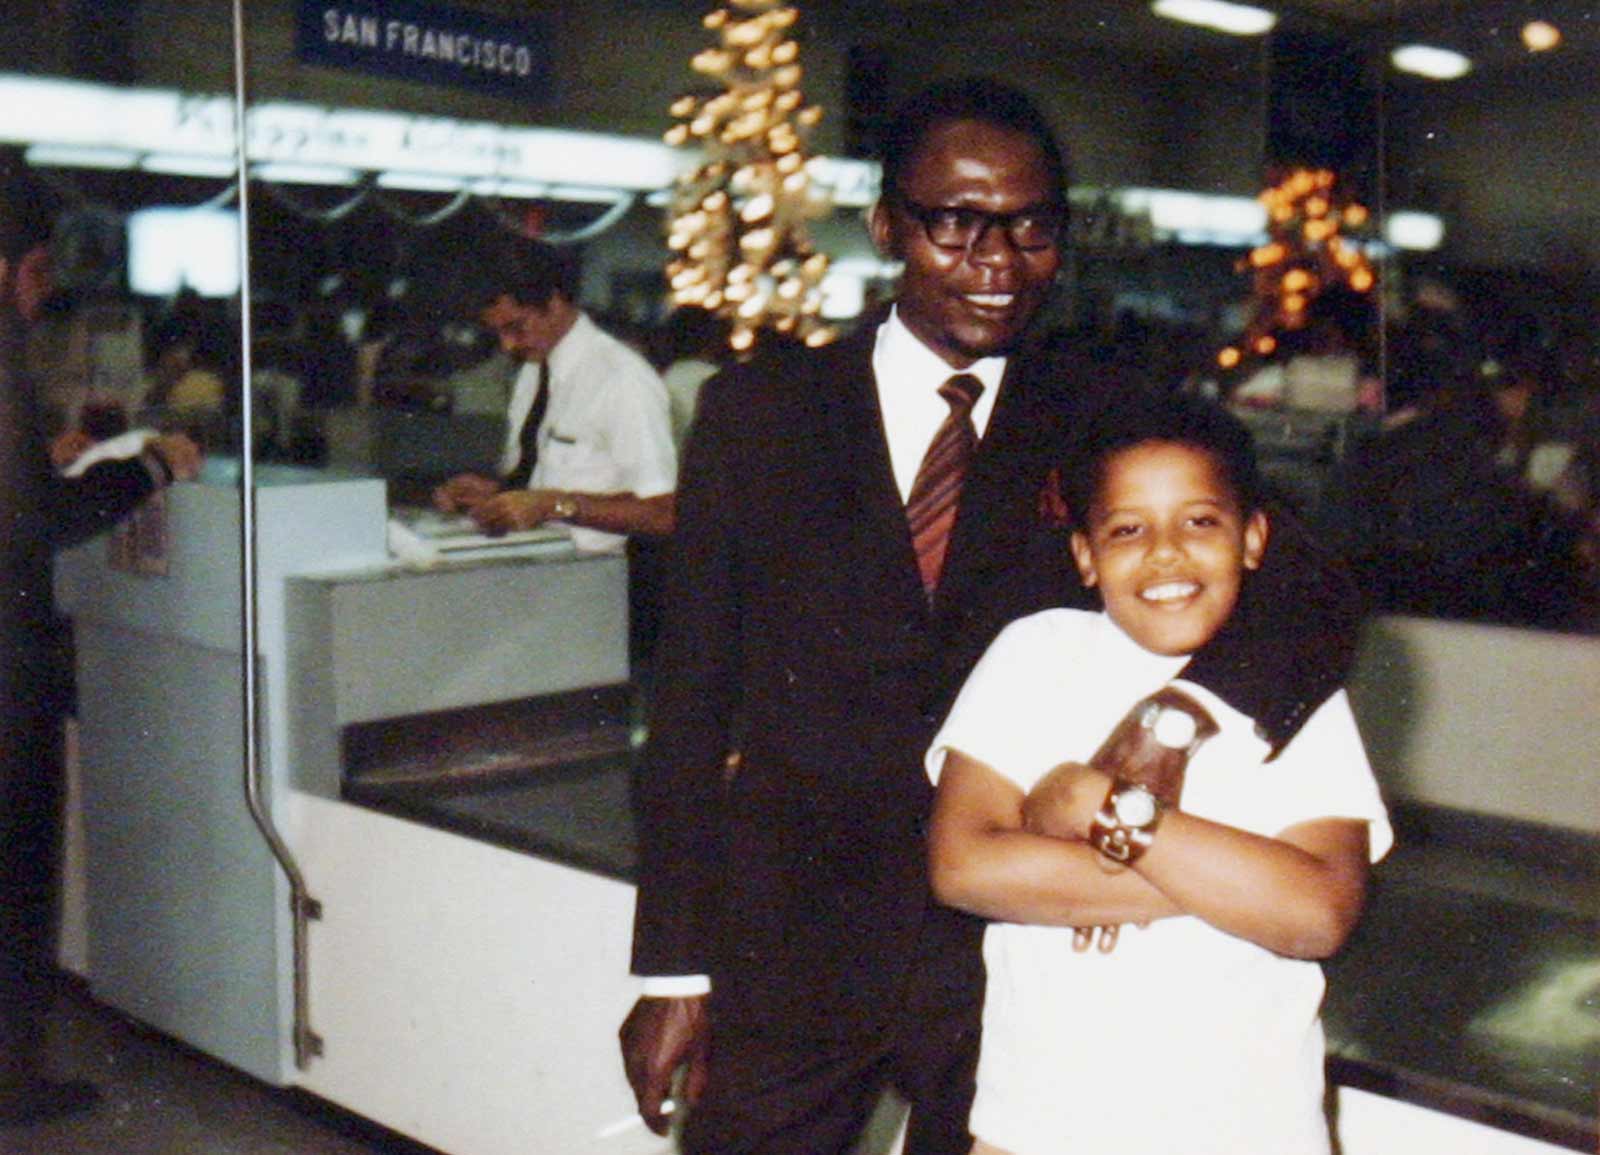 Barack Obama as a child with his father Barack Obama Sr., 1960s